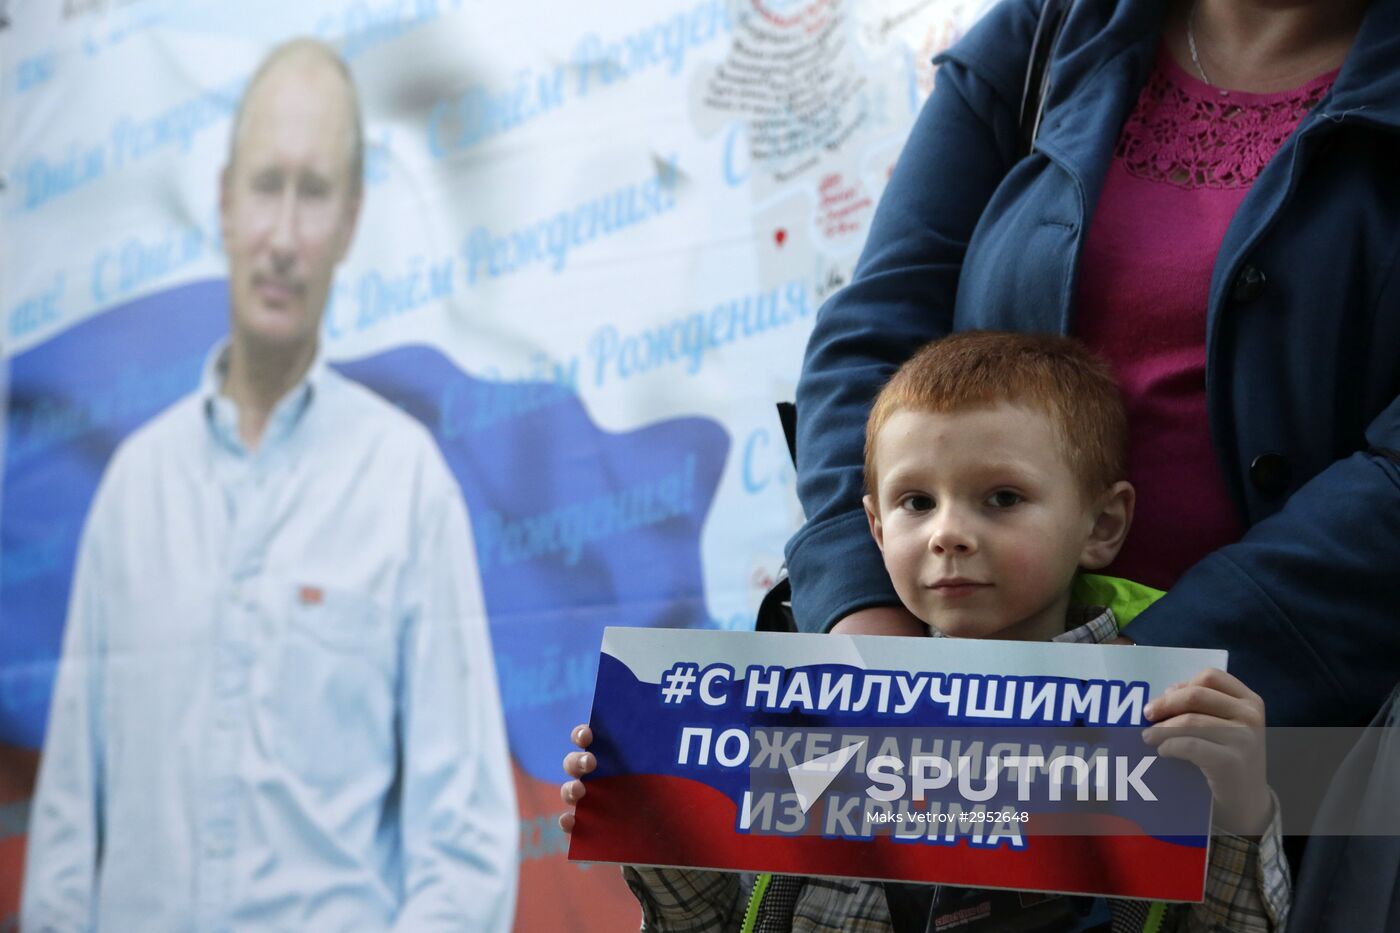 Greeting card for President Putin presented in Simferopol